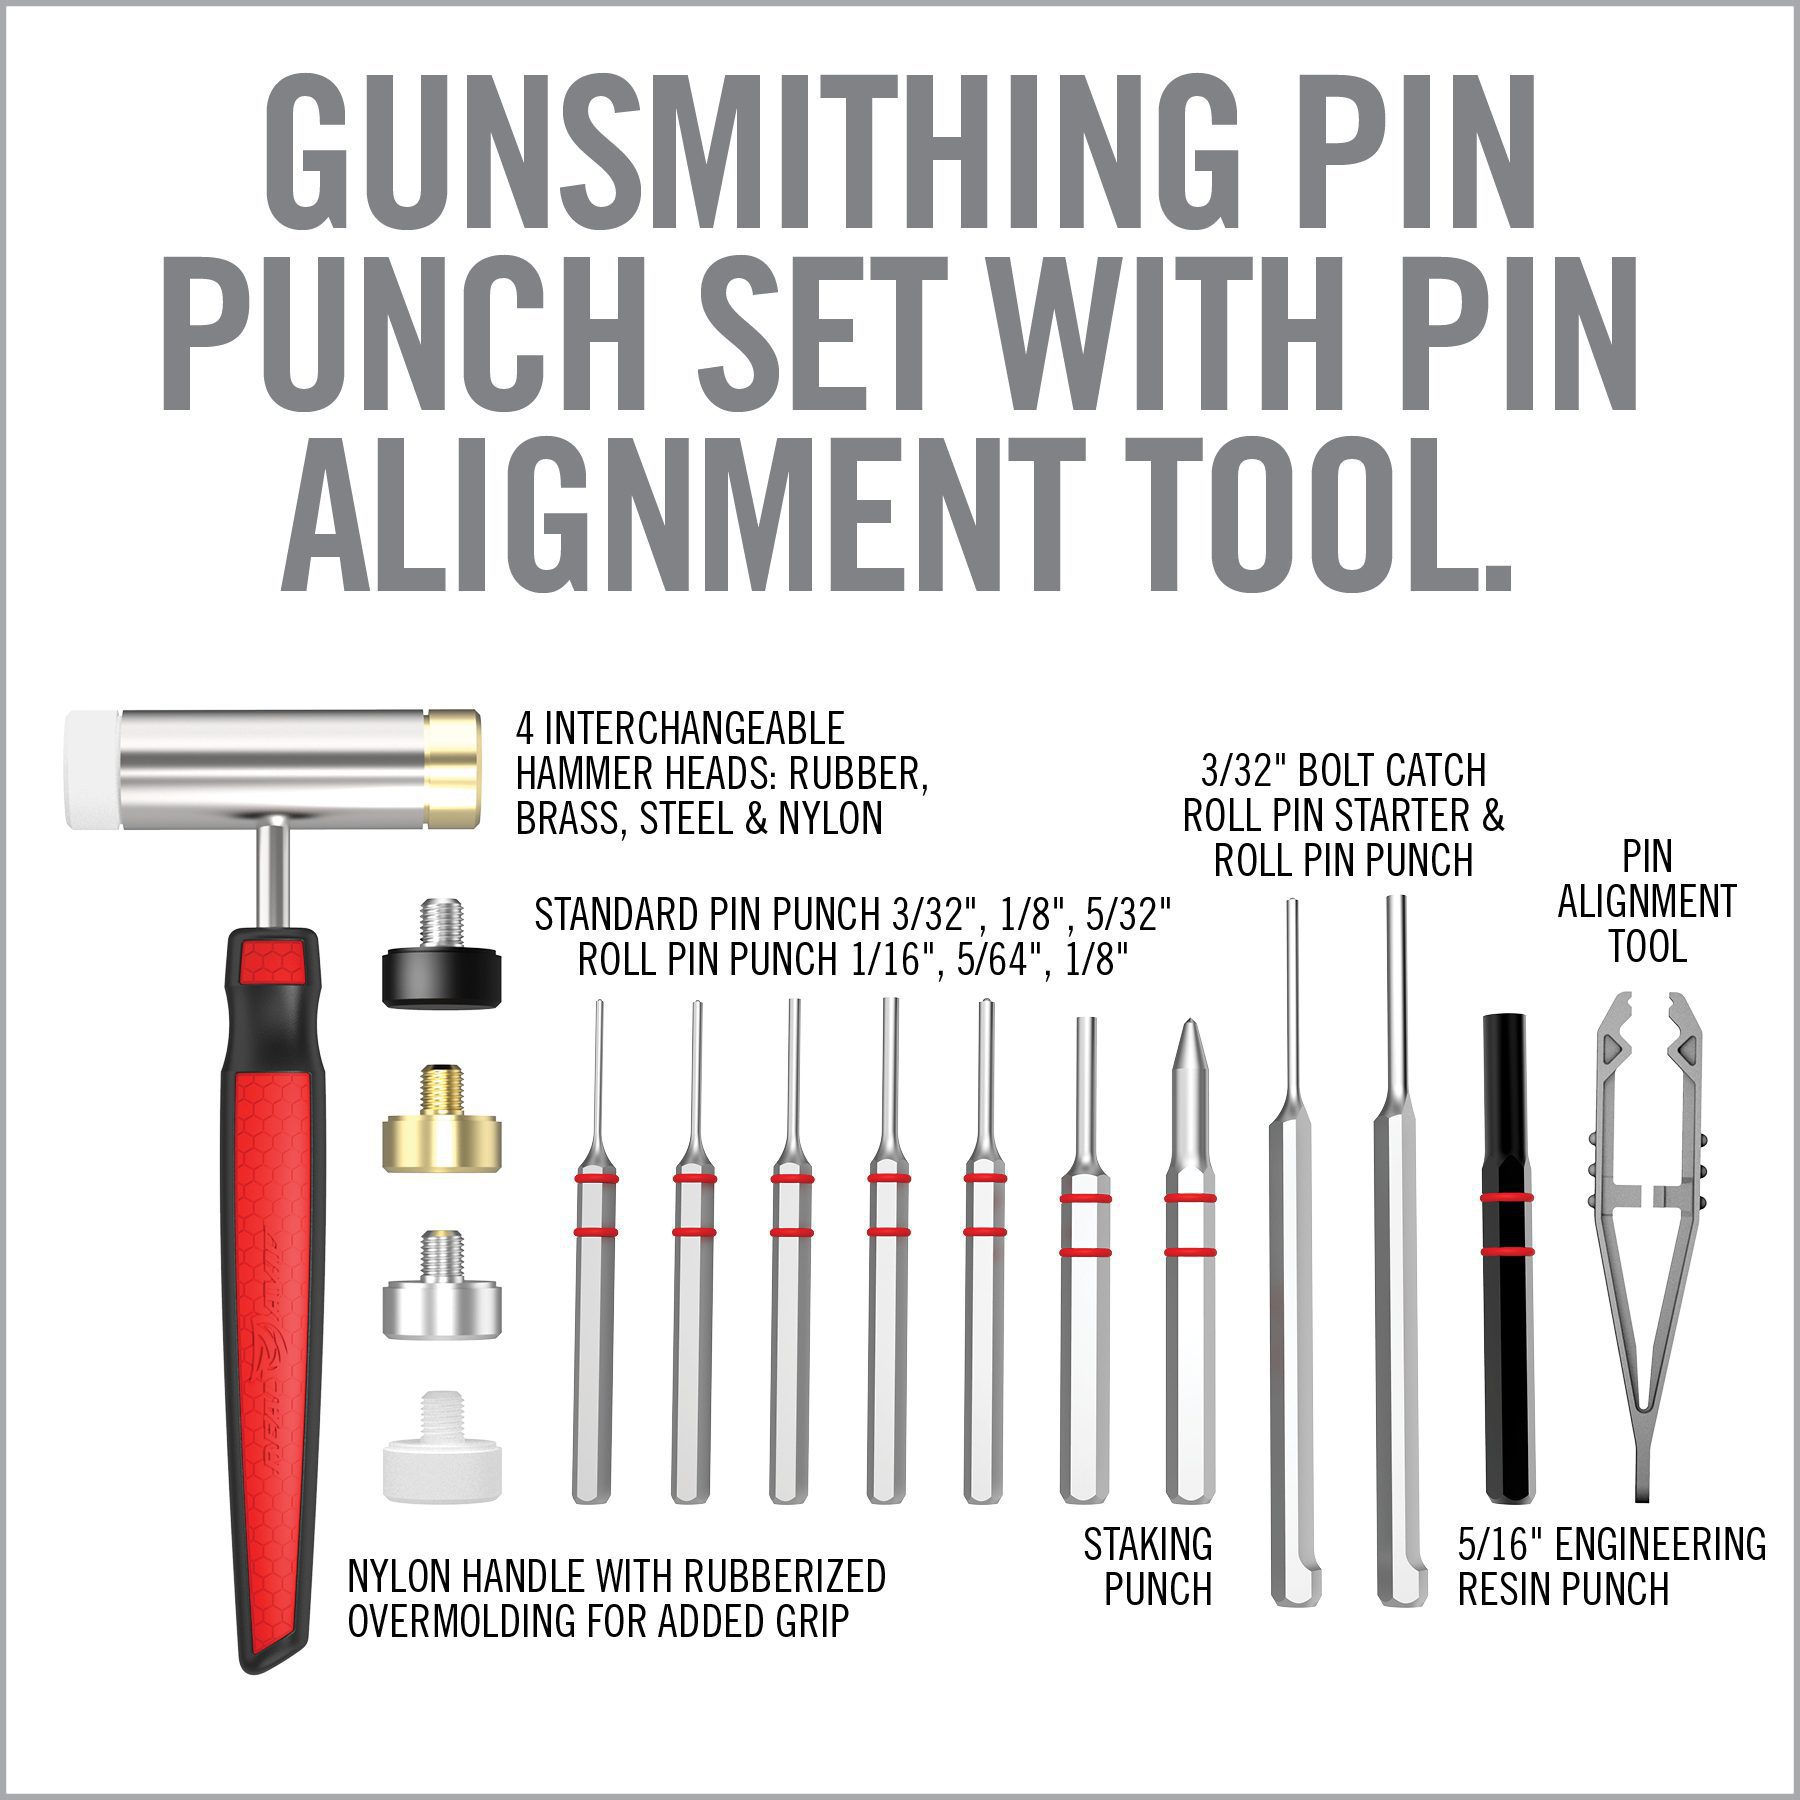 Real Avid Accu-Punch Hammer & AR15 Pin Punch Set